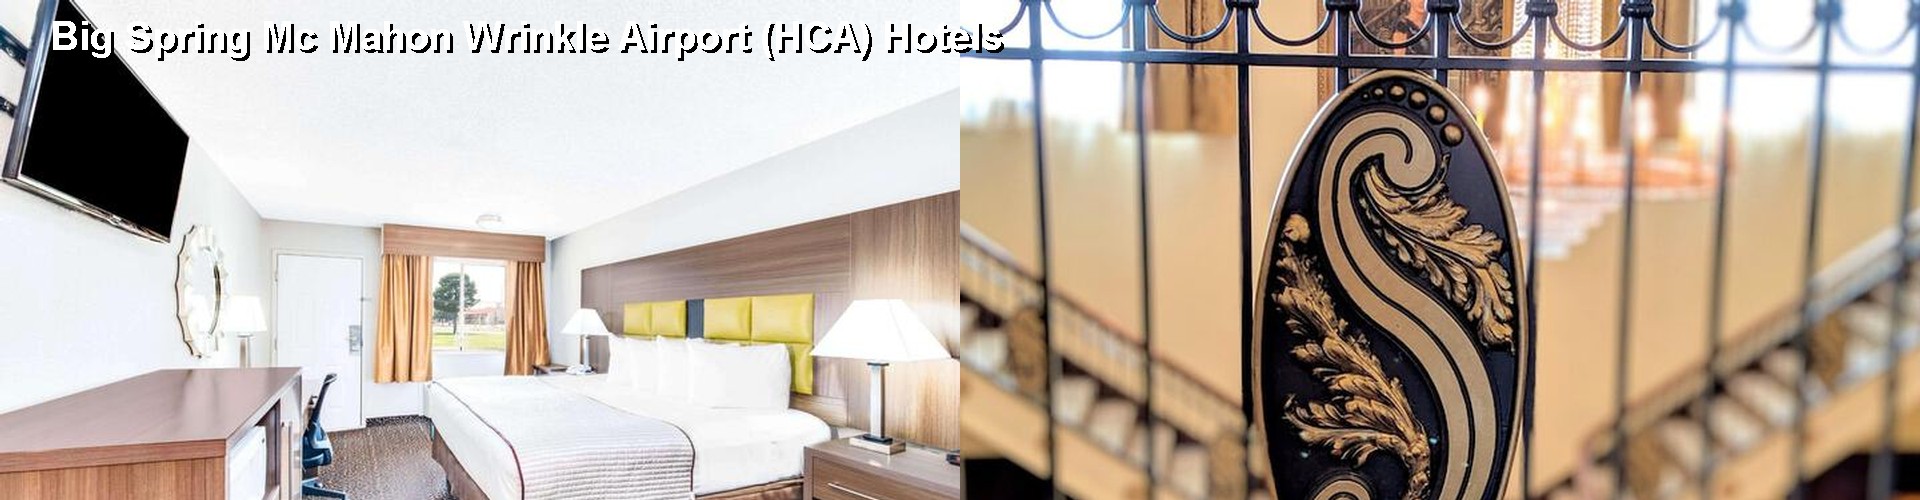 5 Best Hotels near Big Spring Mc Mahon Wrinkle Airport (HCA)